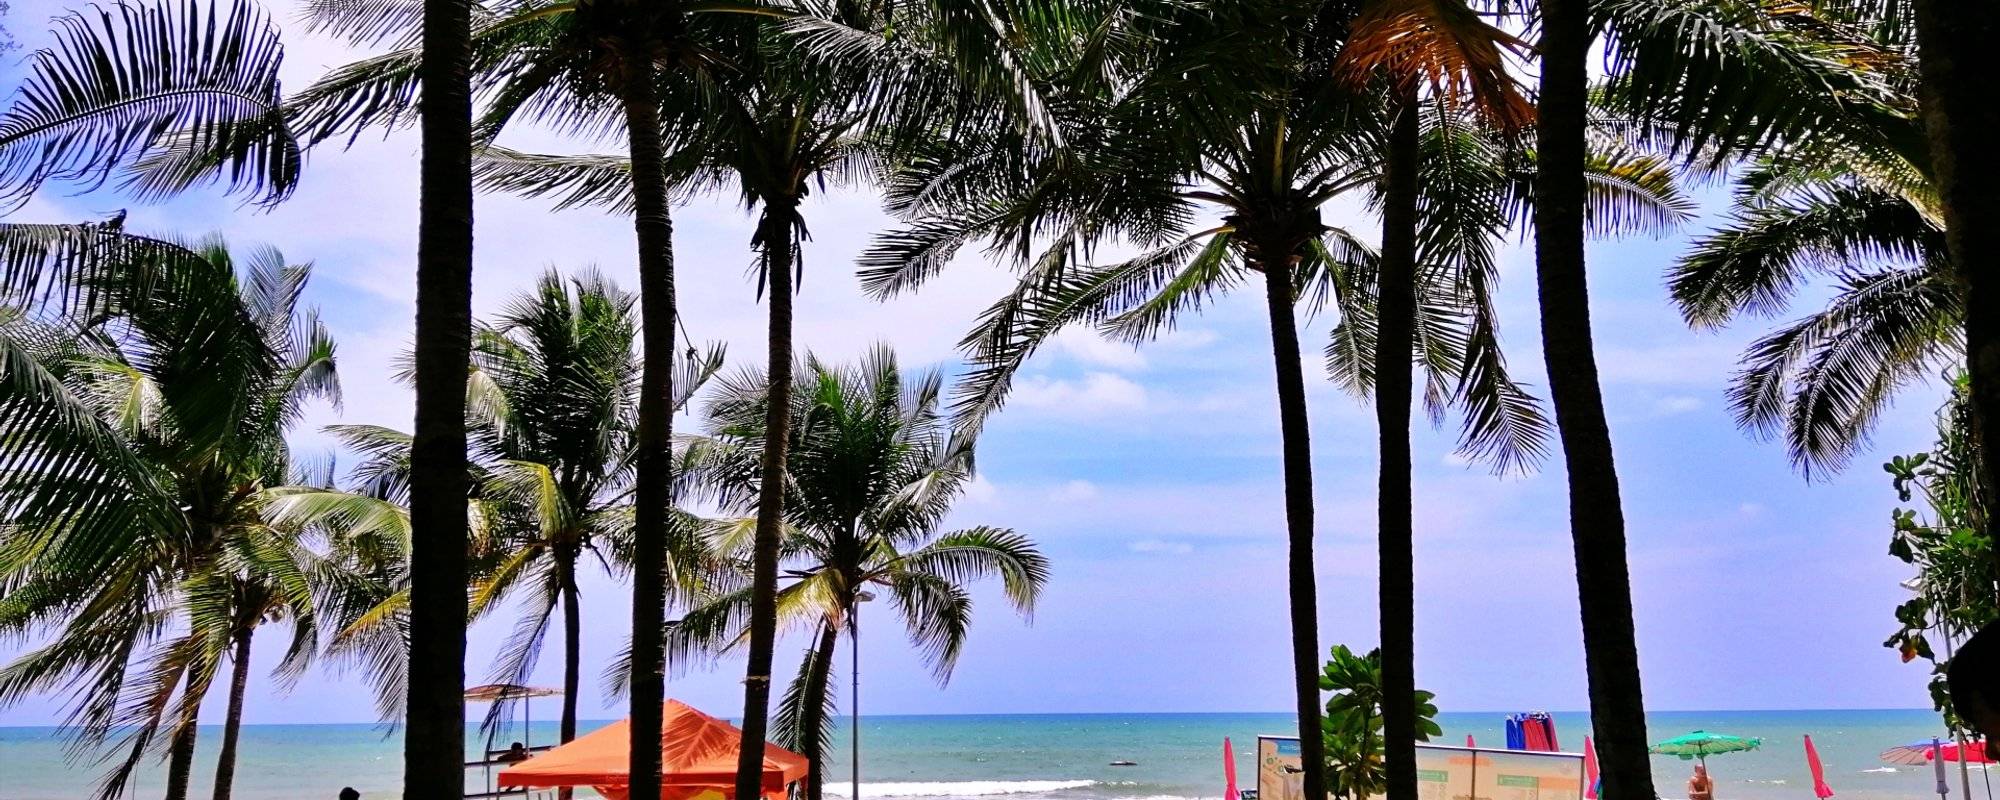 Thailand | Kamala Beach, Phuket 🏖️🌊 Visakha Bucha Day (กิจกรรมวันวิสาขบูชา)